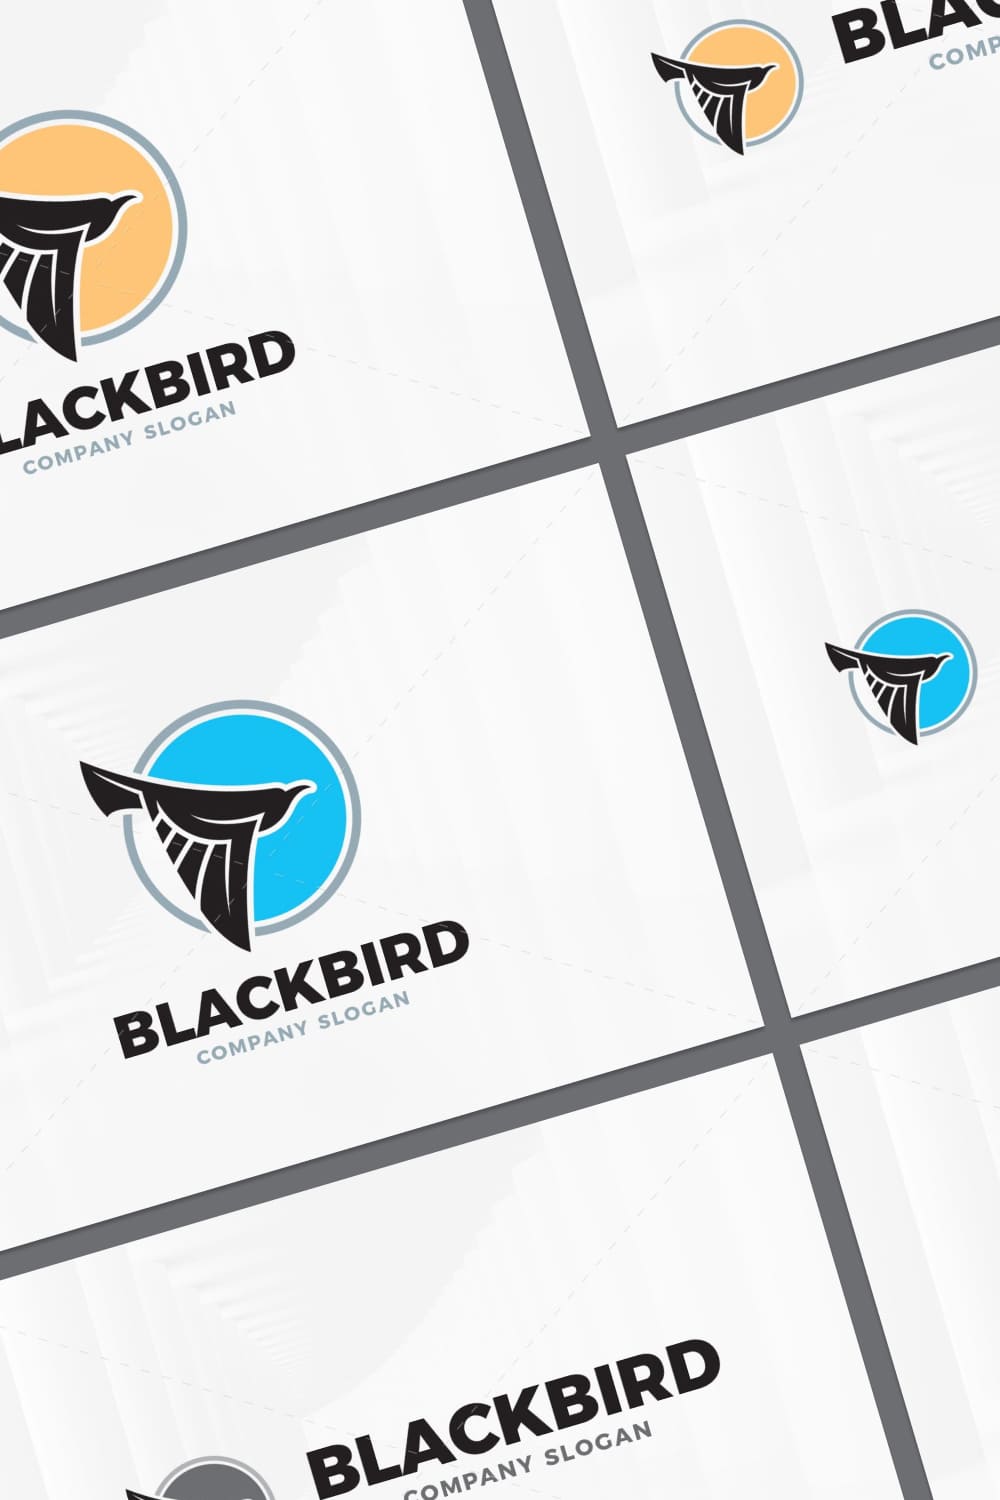 Black Bird Logo Template.